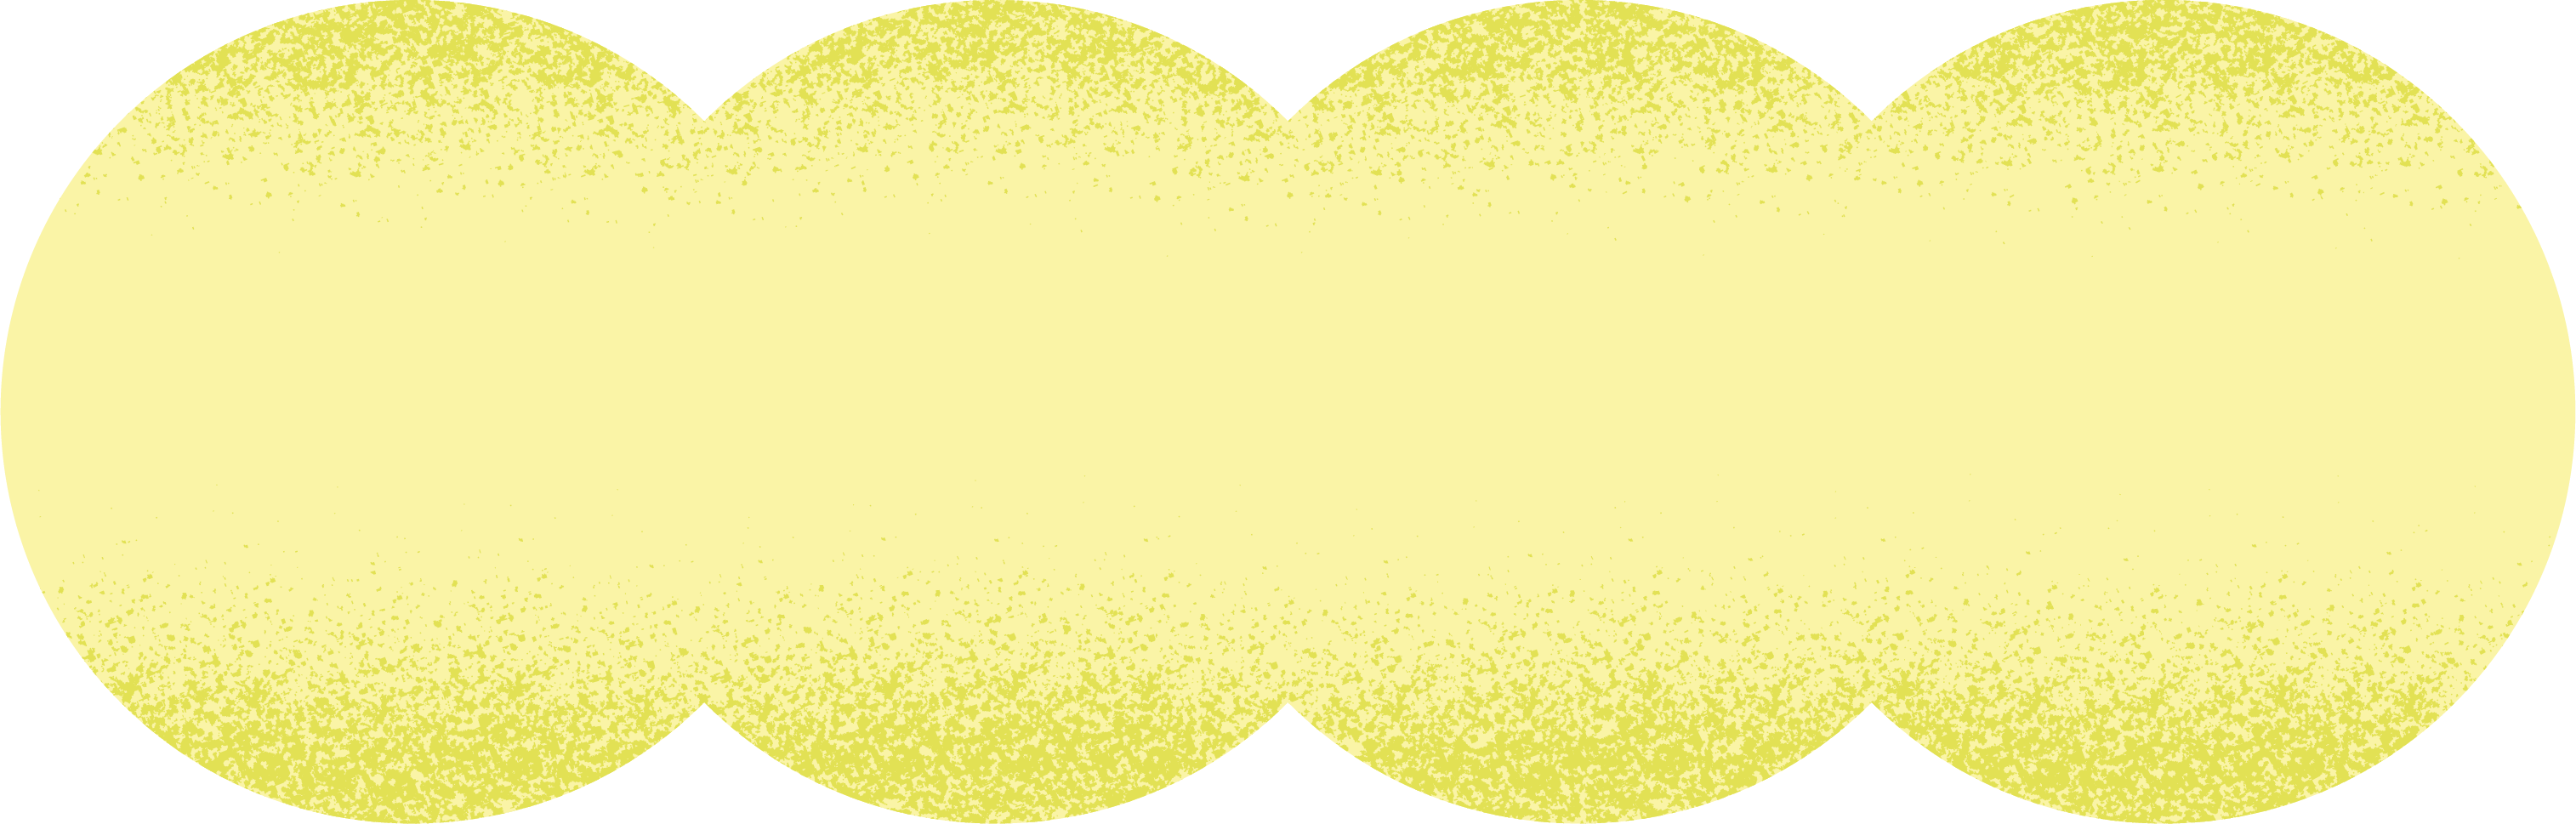 Button background shape